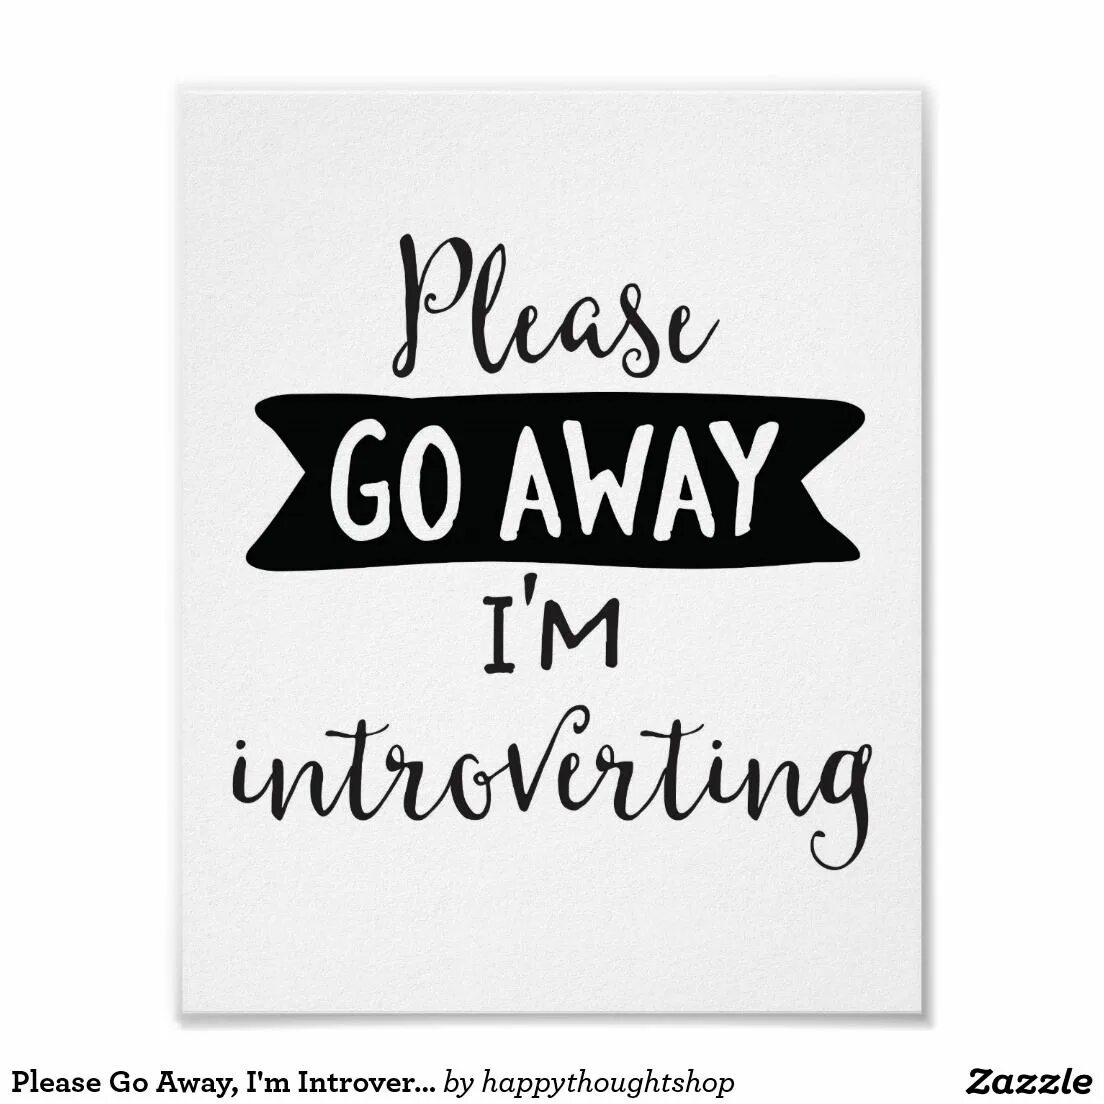 Making go away. Go away i'm Introverting. Топ i'm Introvert. Please go away с фоном. I'M Introvert надпись.